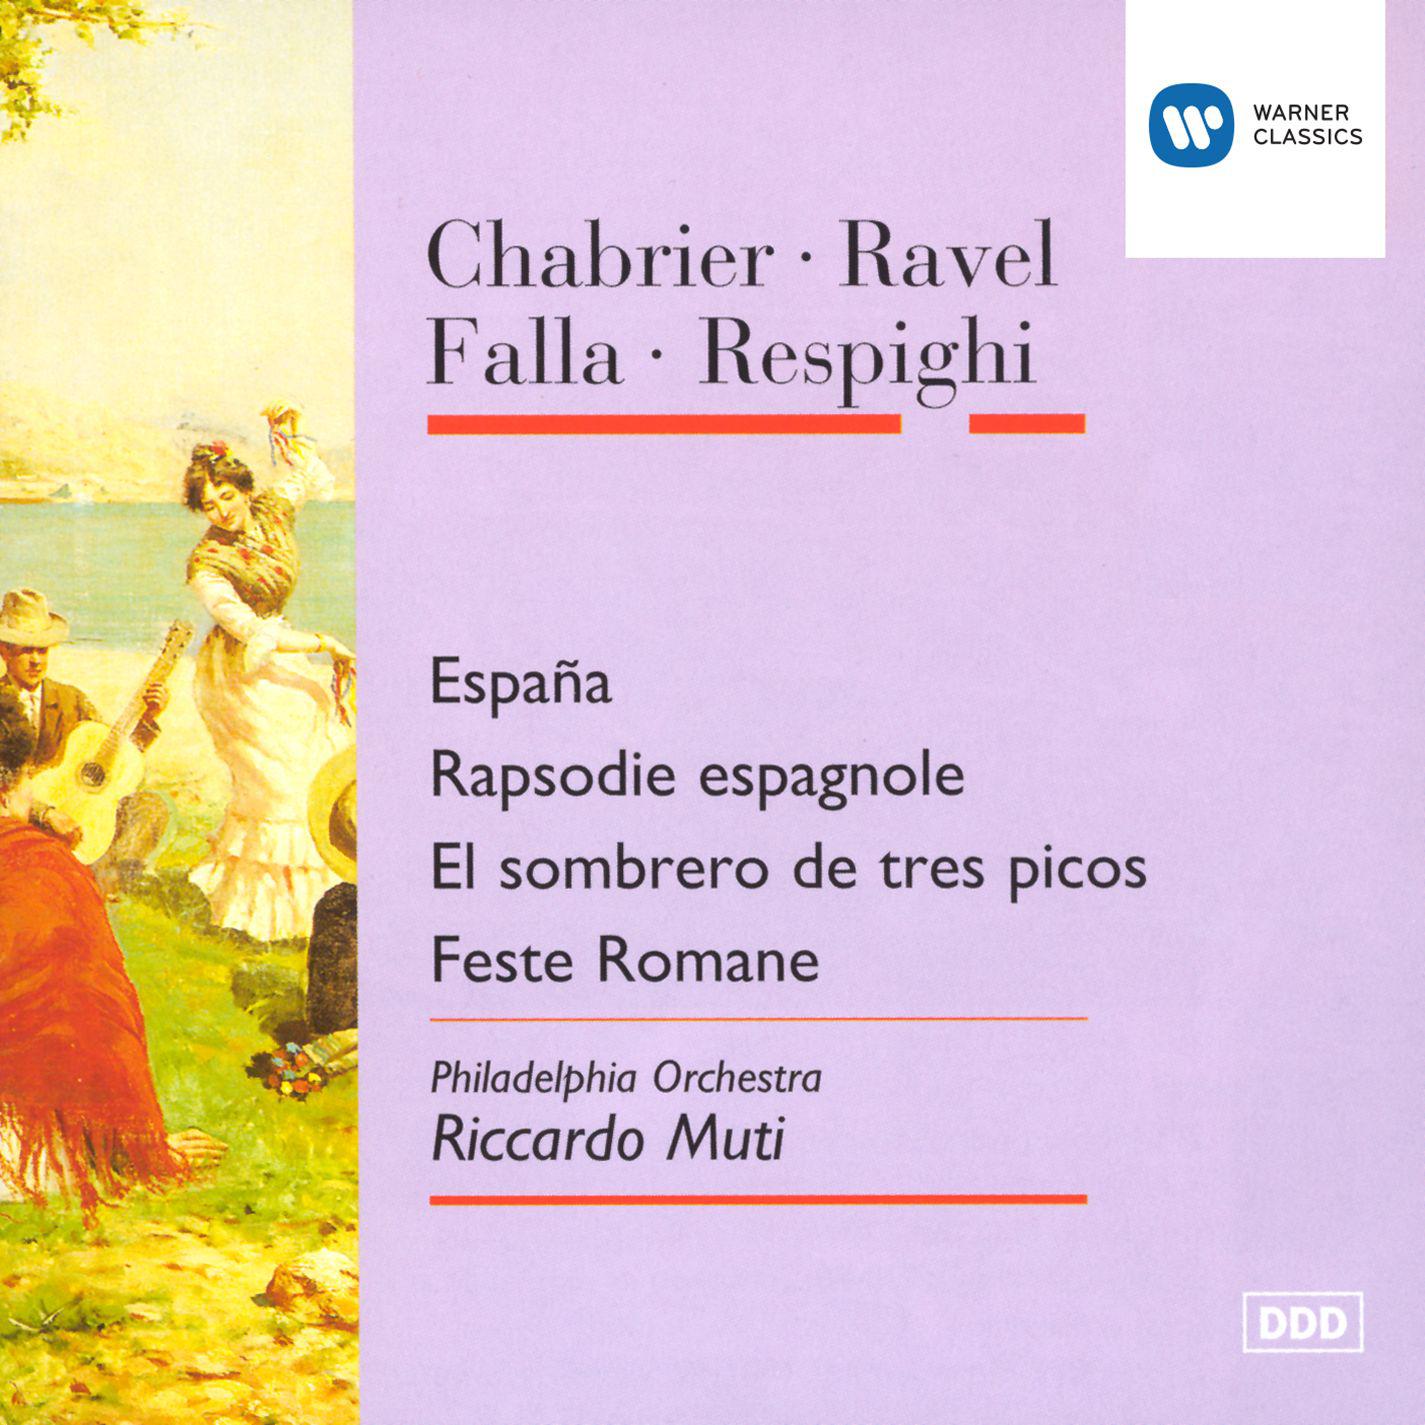 Chabrier / Ravel / Falla / Respighi